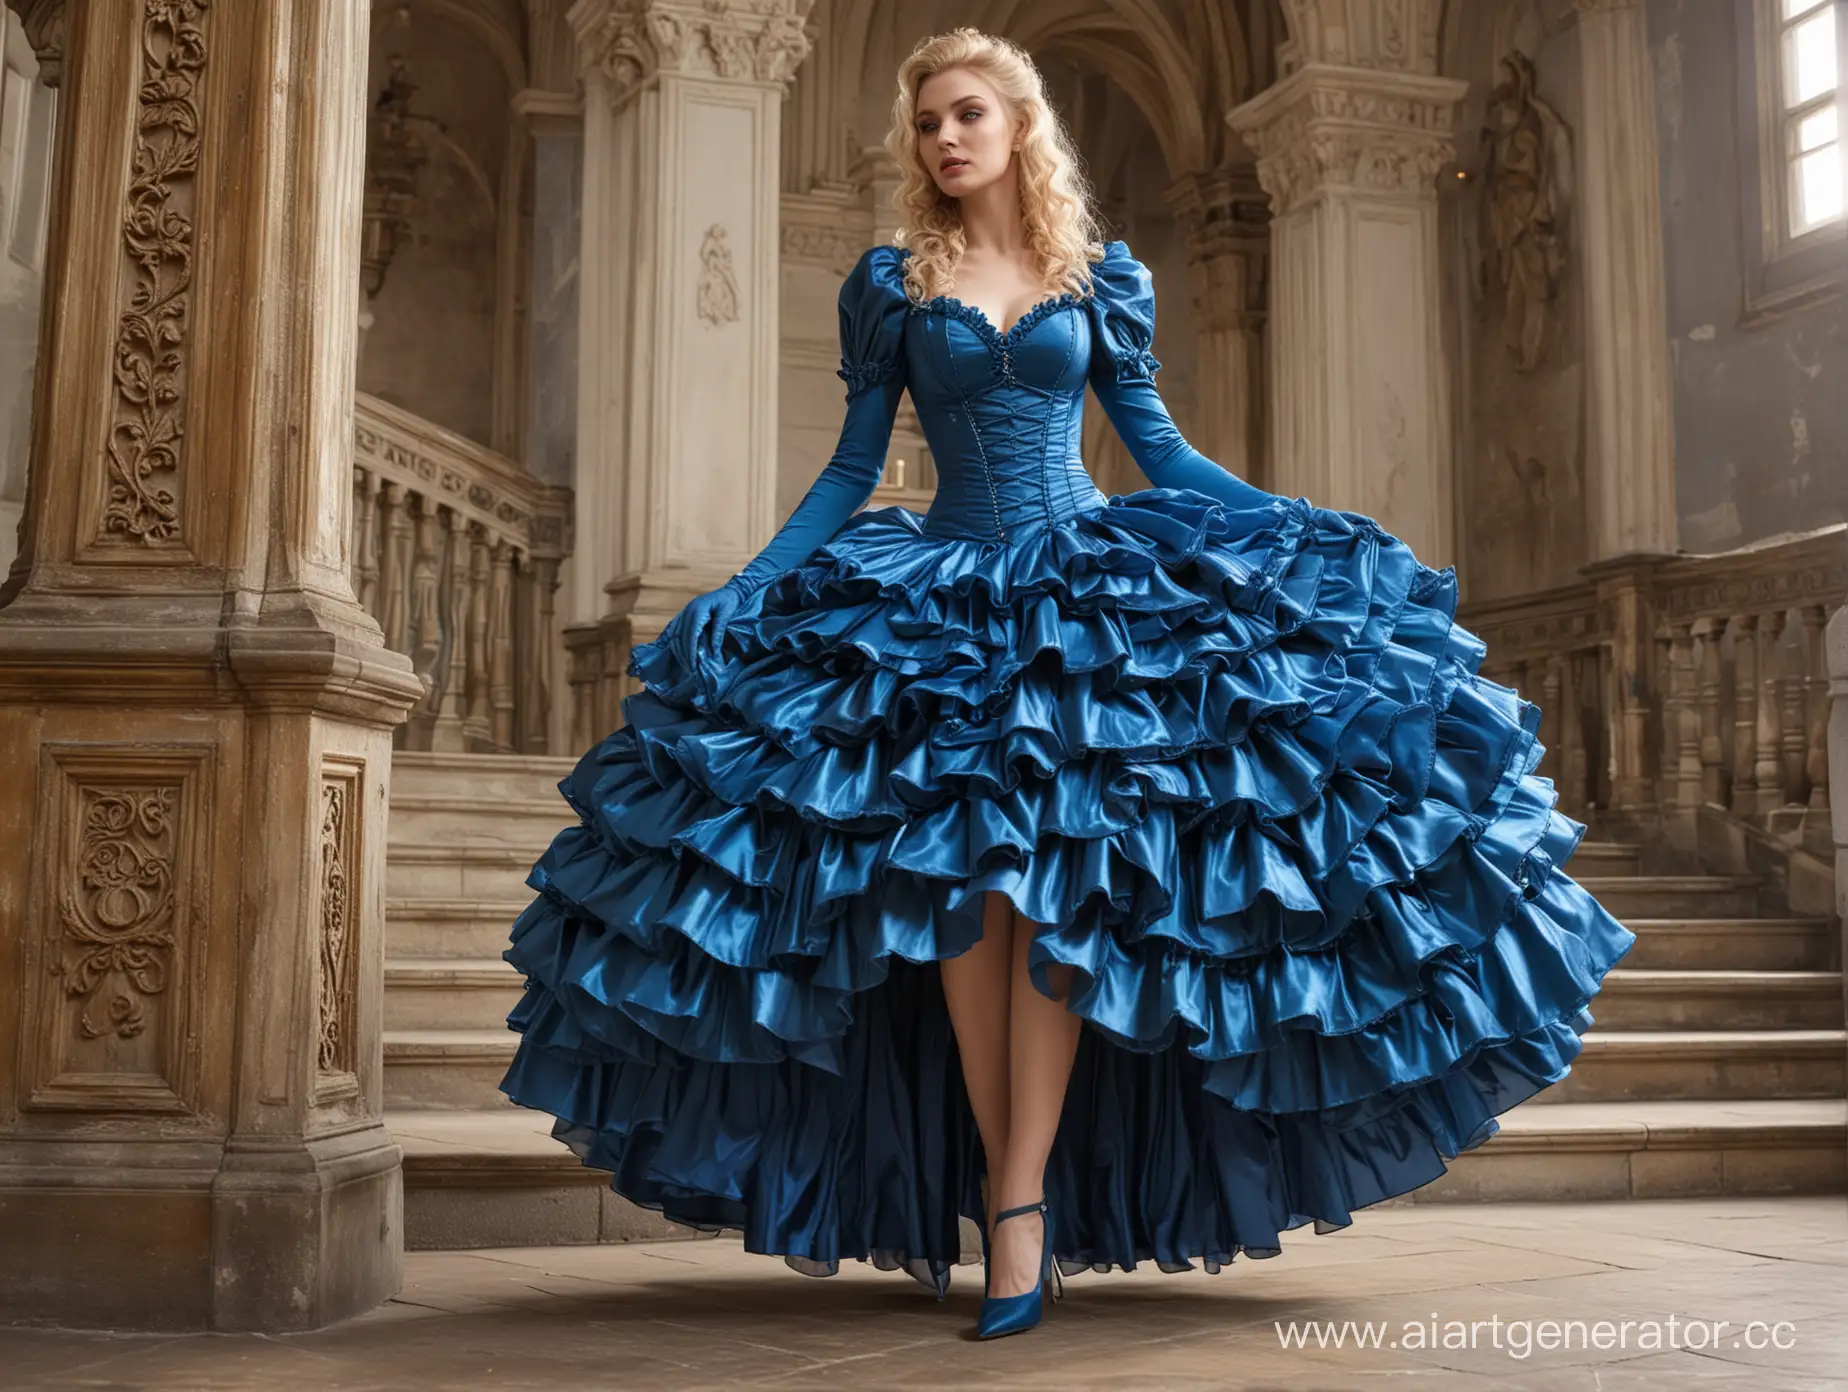 Elegant-25YearOld-Elf-in-Blue-Dress-on-Palace-Throne